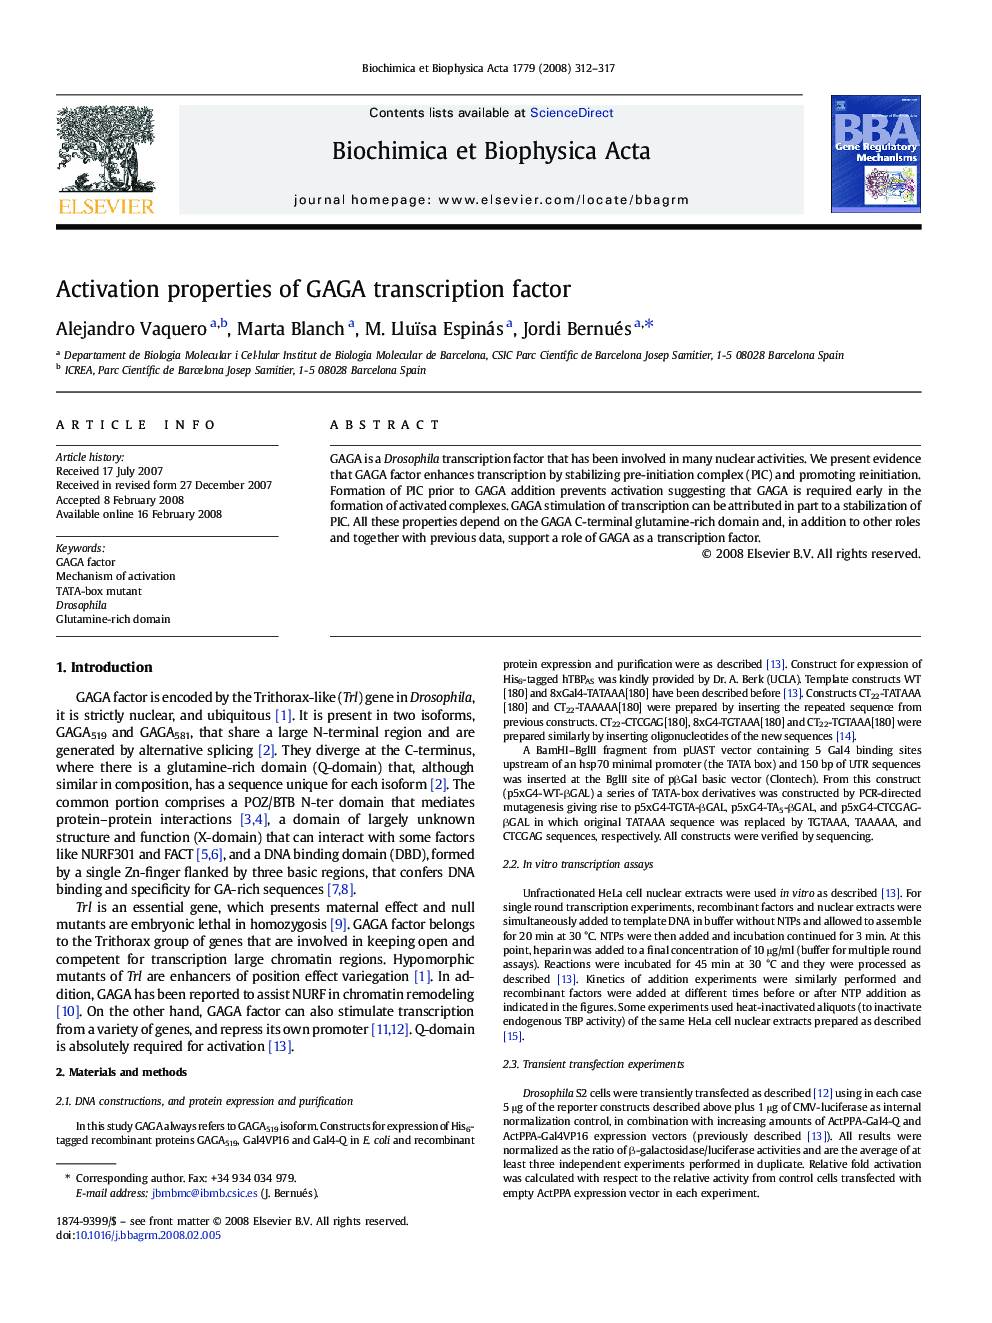 Activation properties of GAGA transcription factor